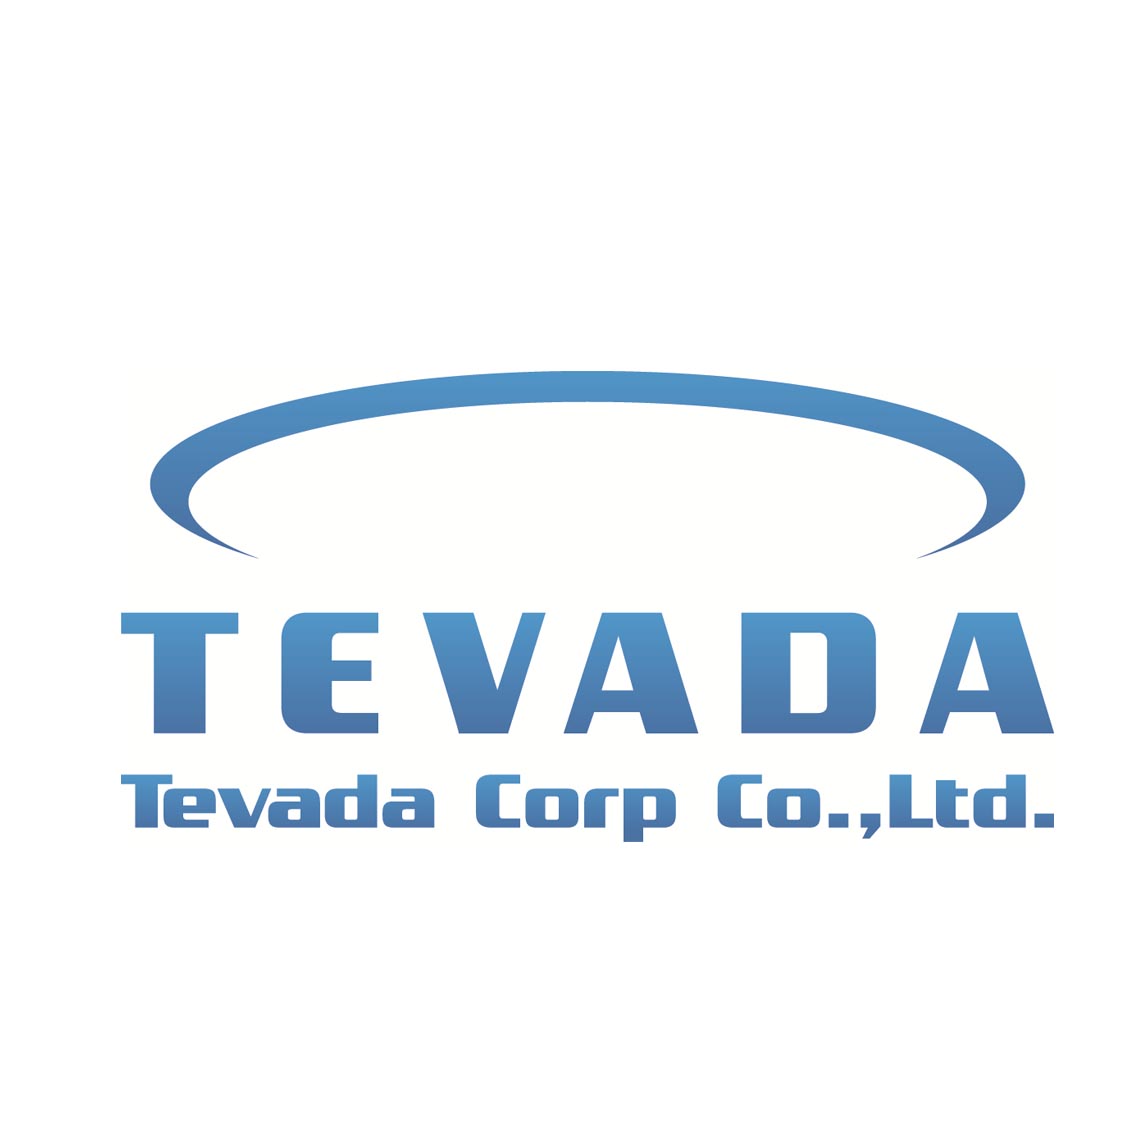 Tevada Corp